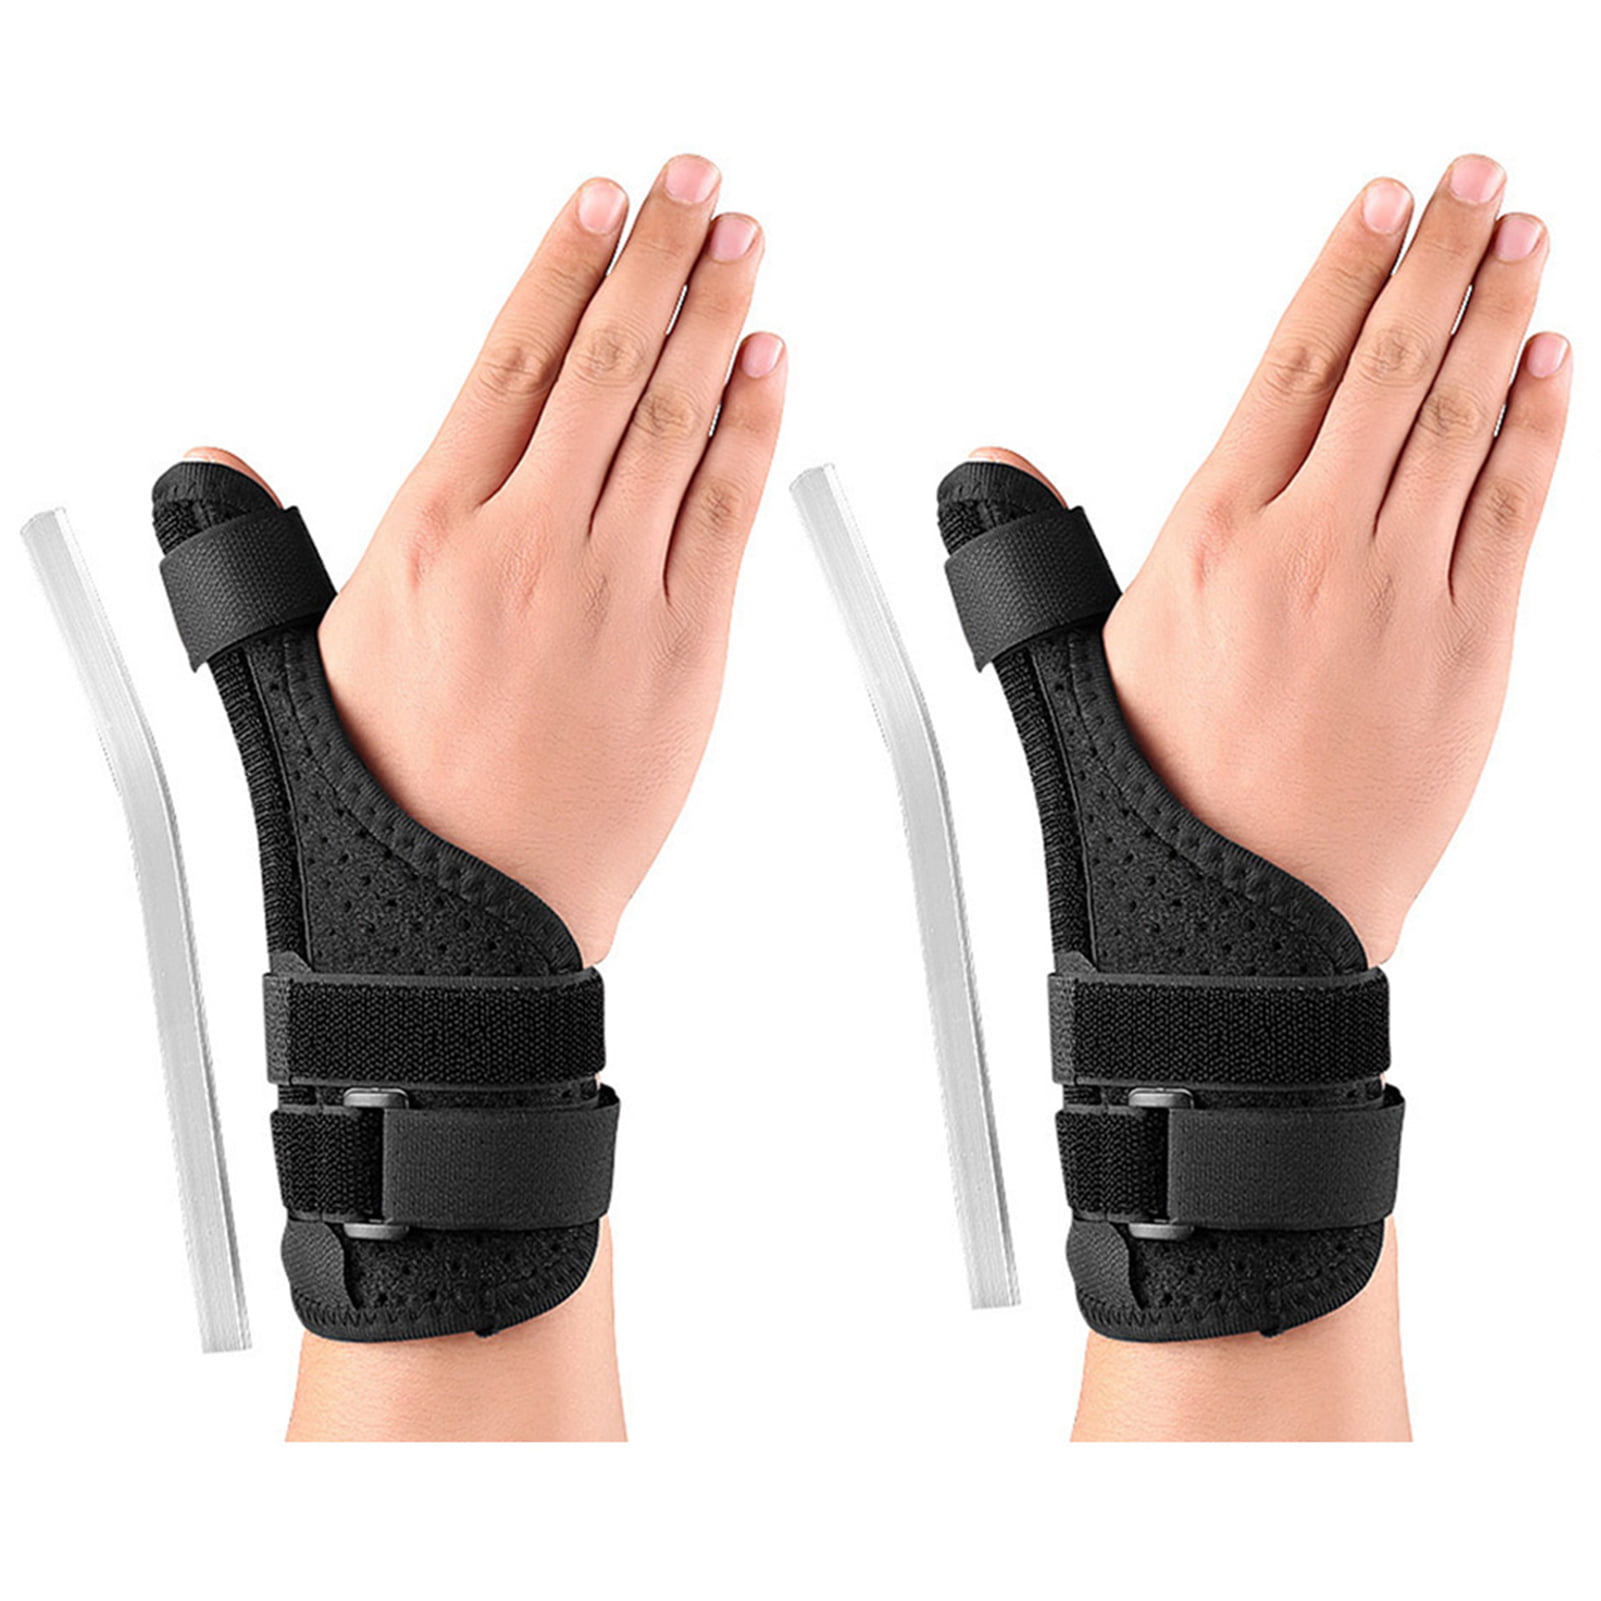 Comfort Aid Unique Design for Extra Comfort Wrist Support Deluxe Washable 